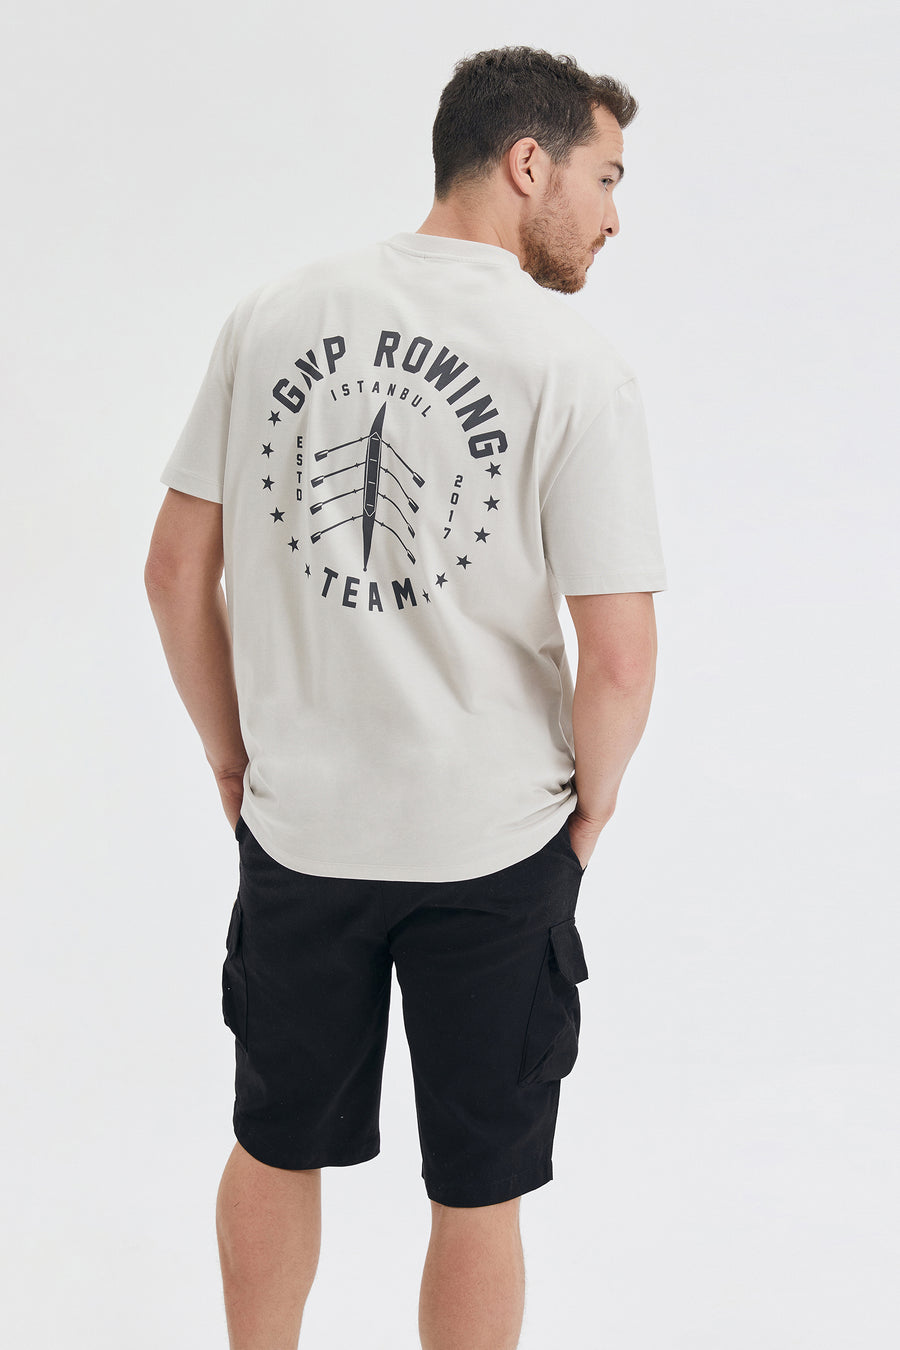 GNP Rowing T-Shirt